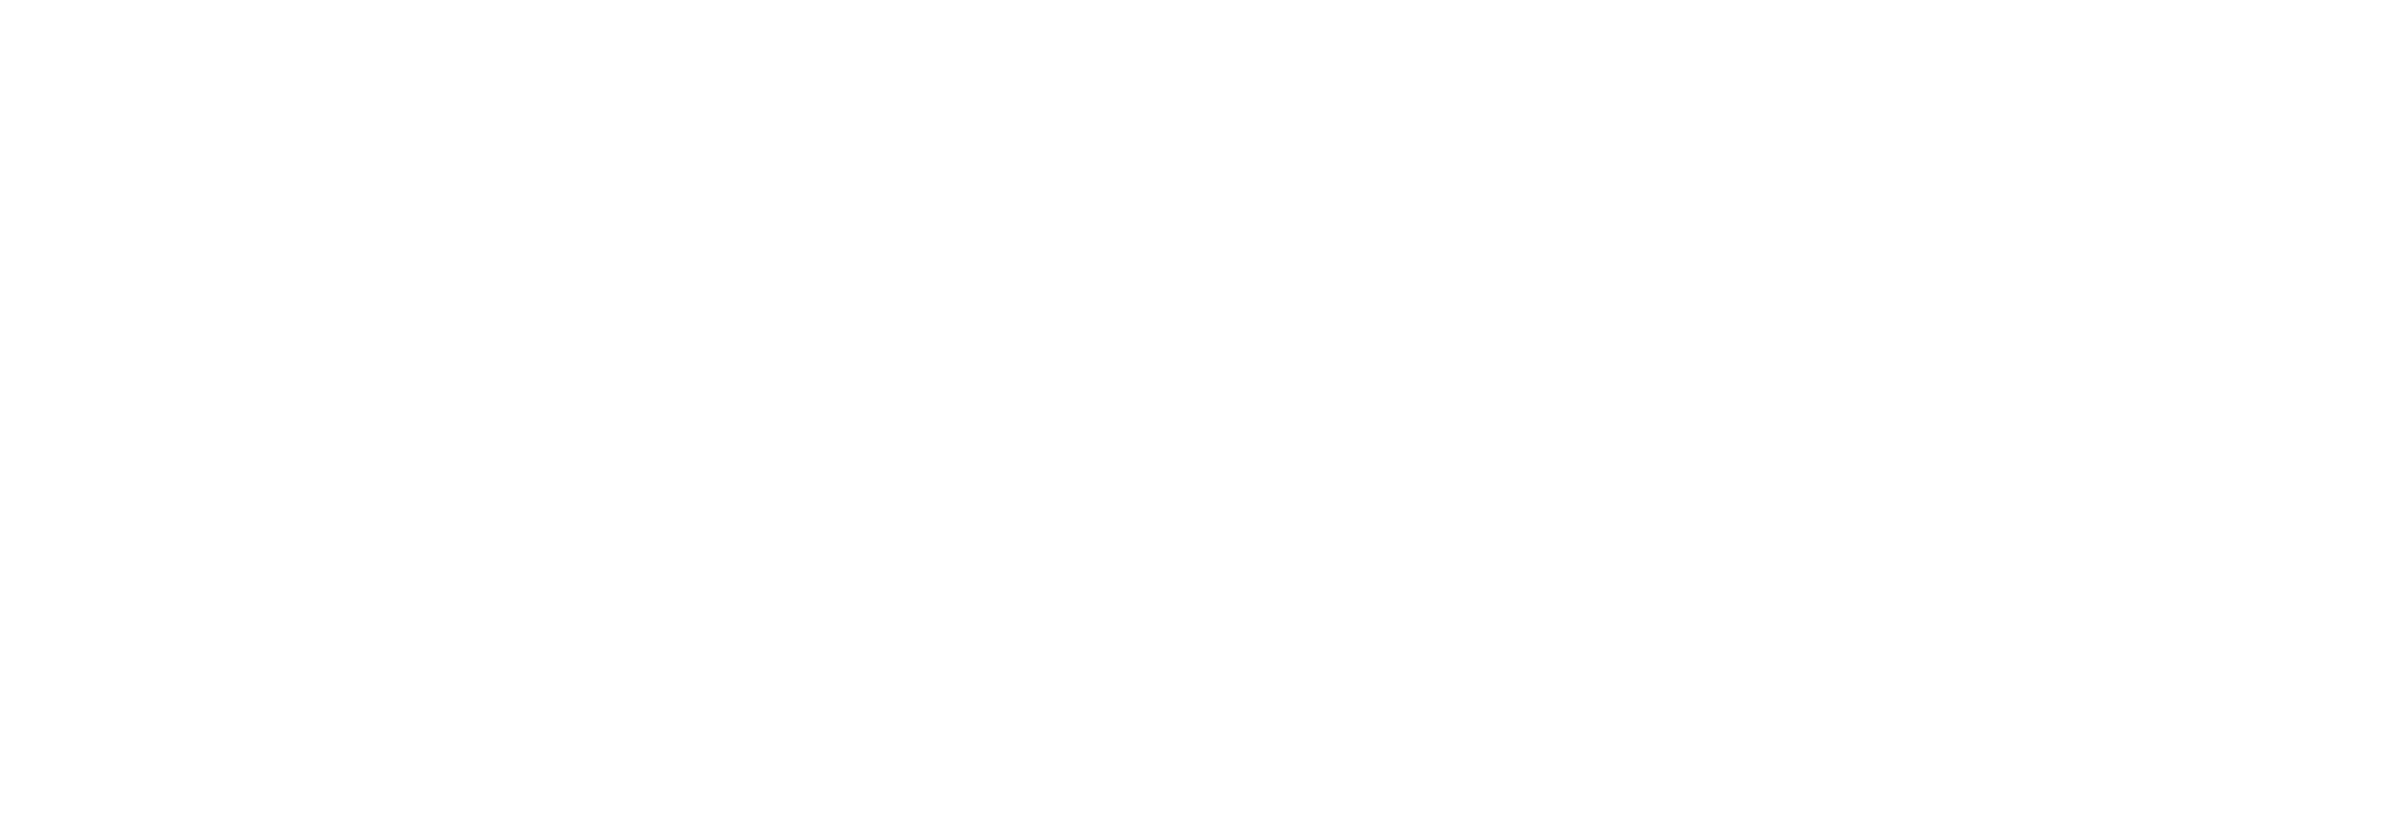 Nestle logo in white